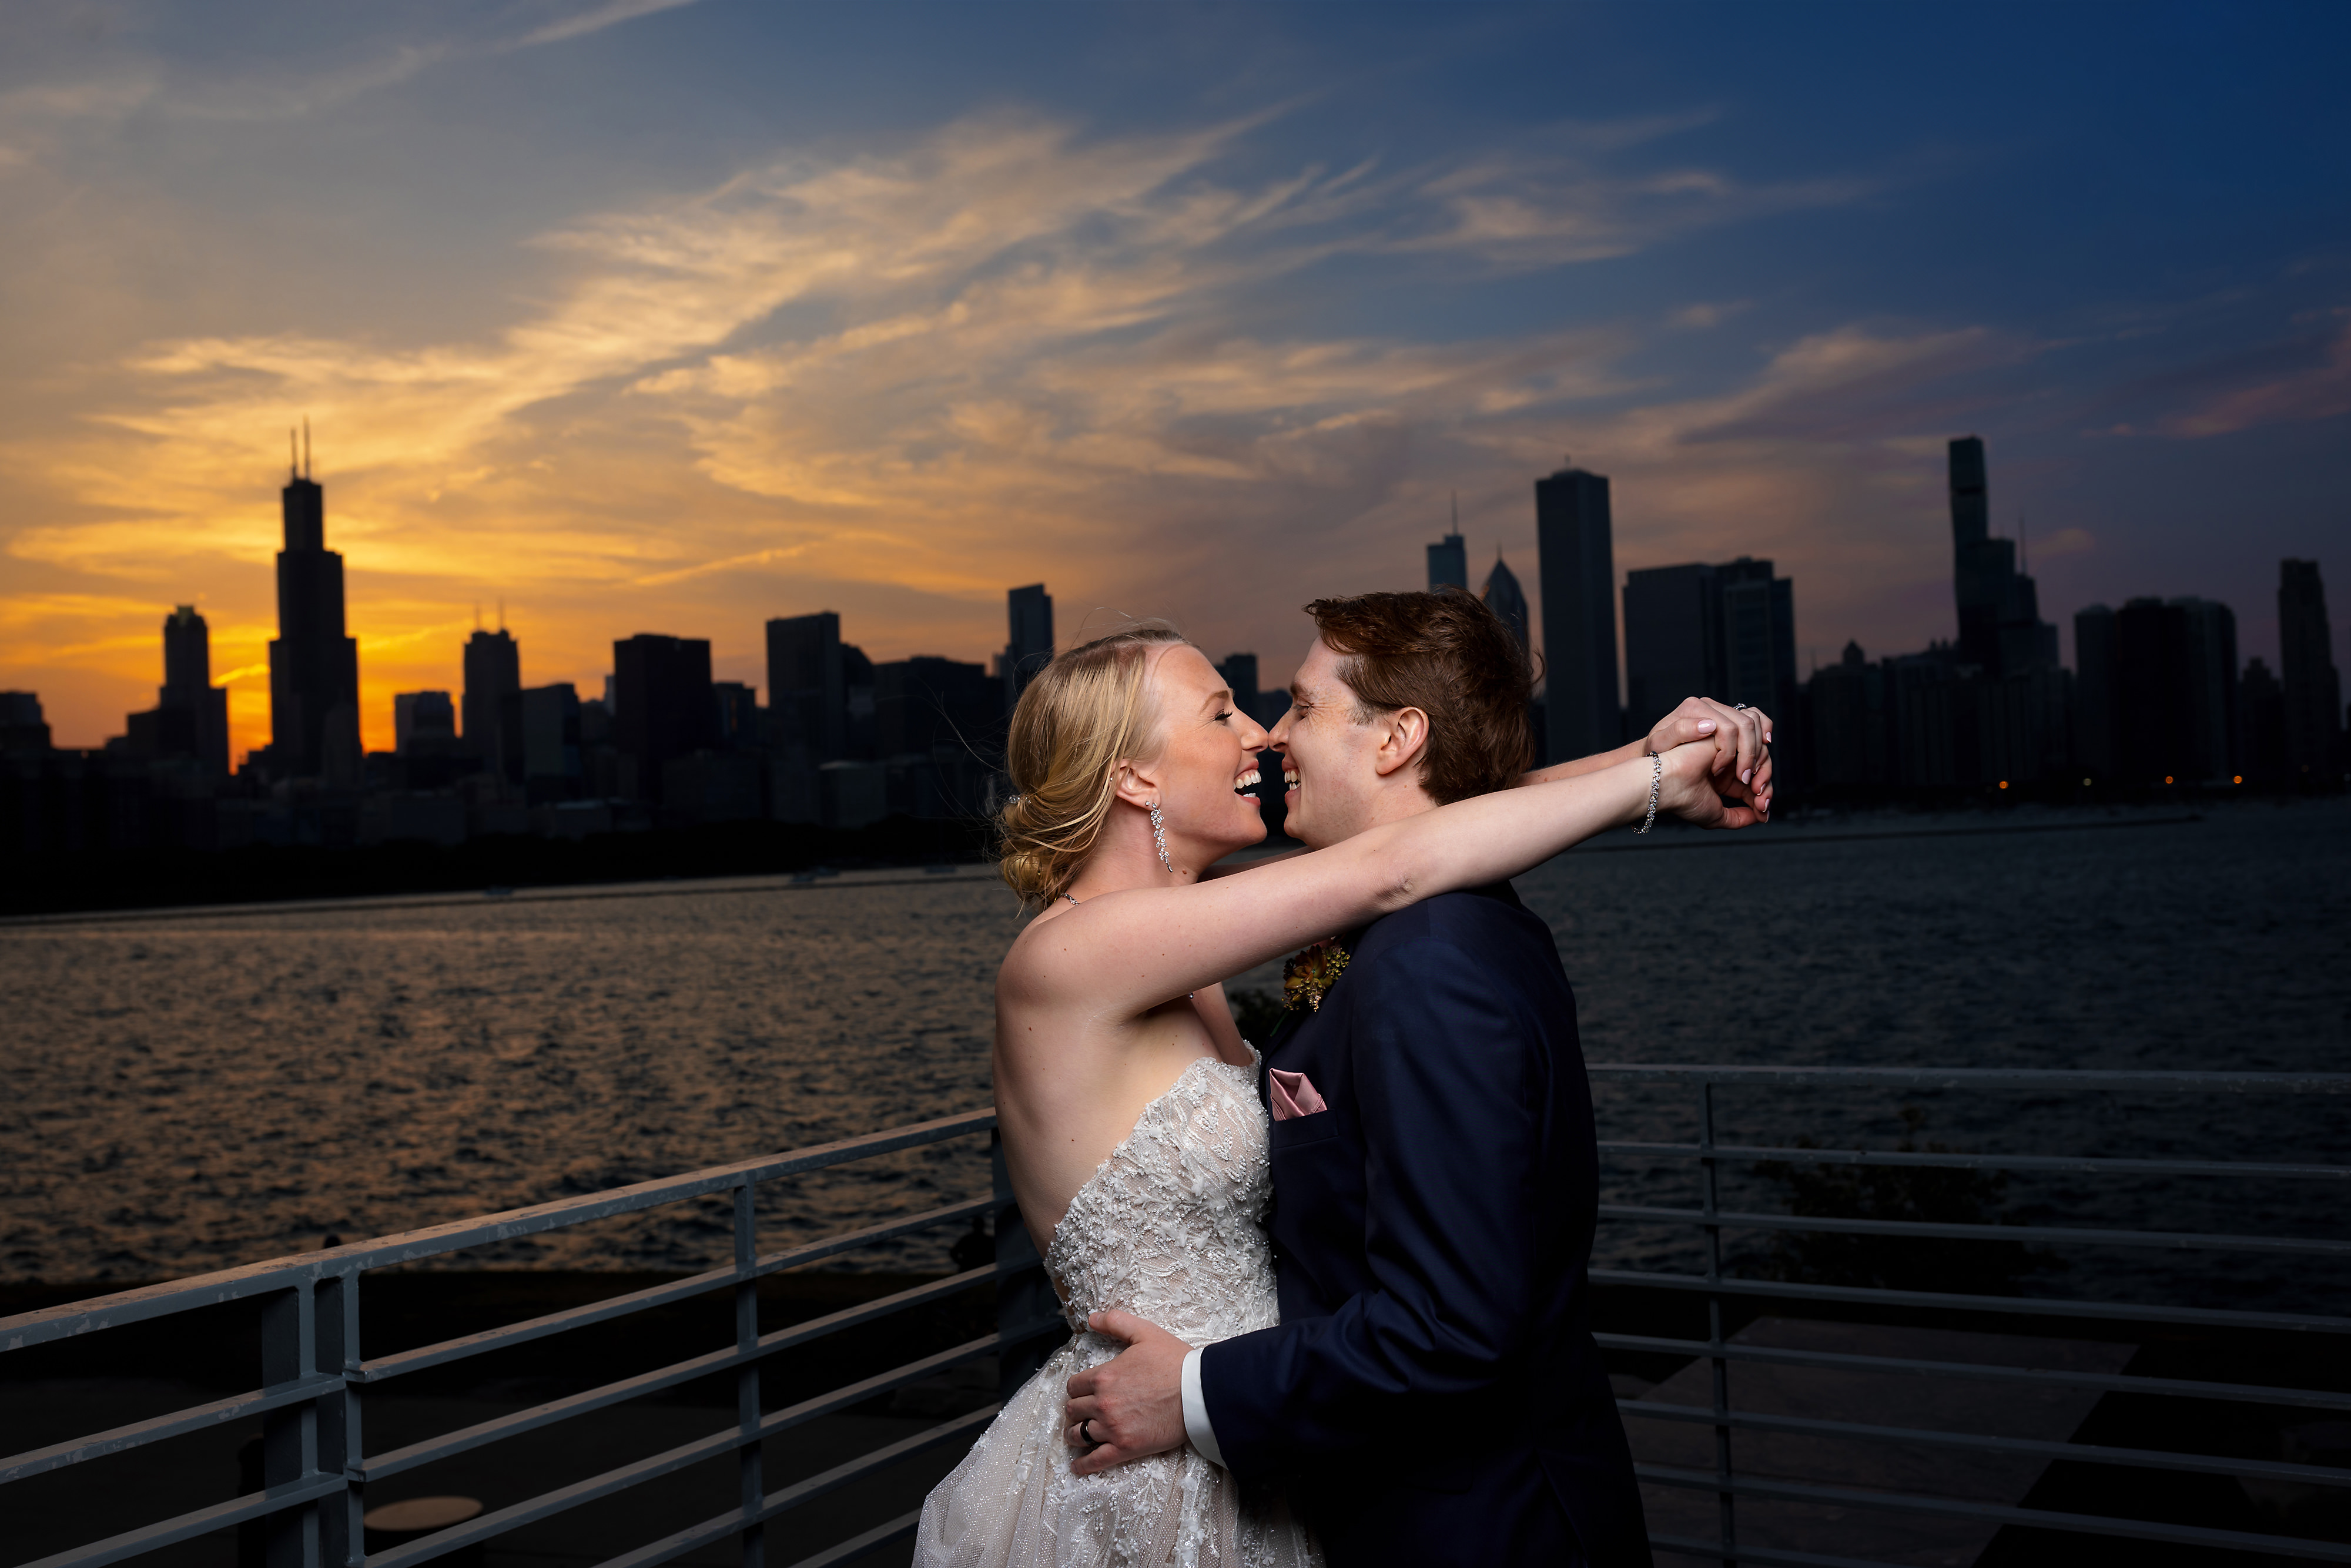 sunset portrait of bride and groom at Adler Planetarium in Chicago